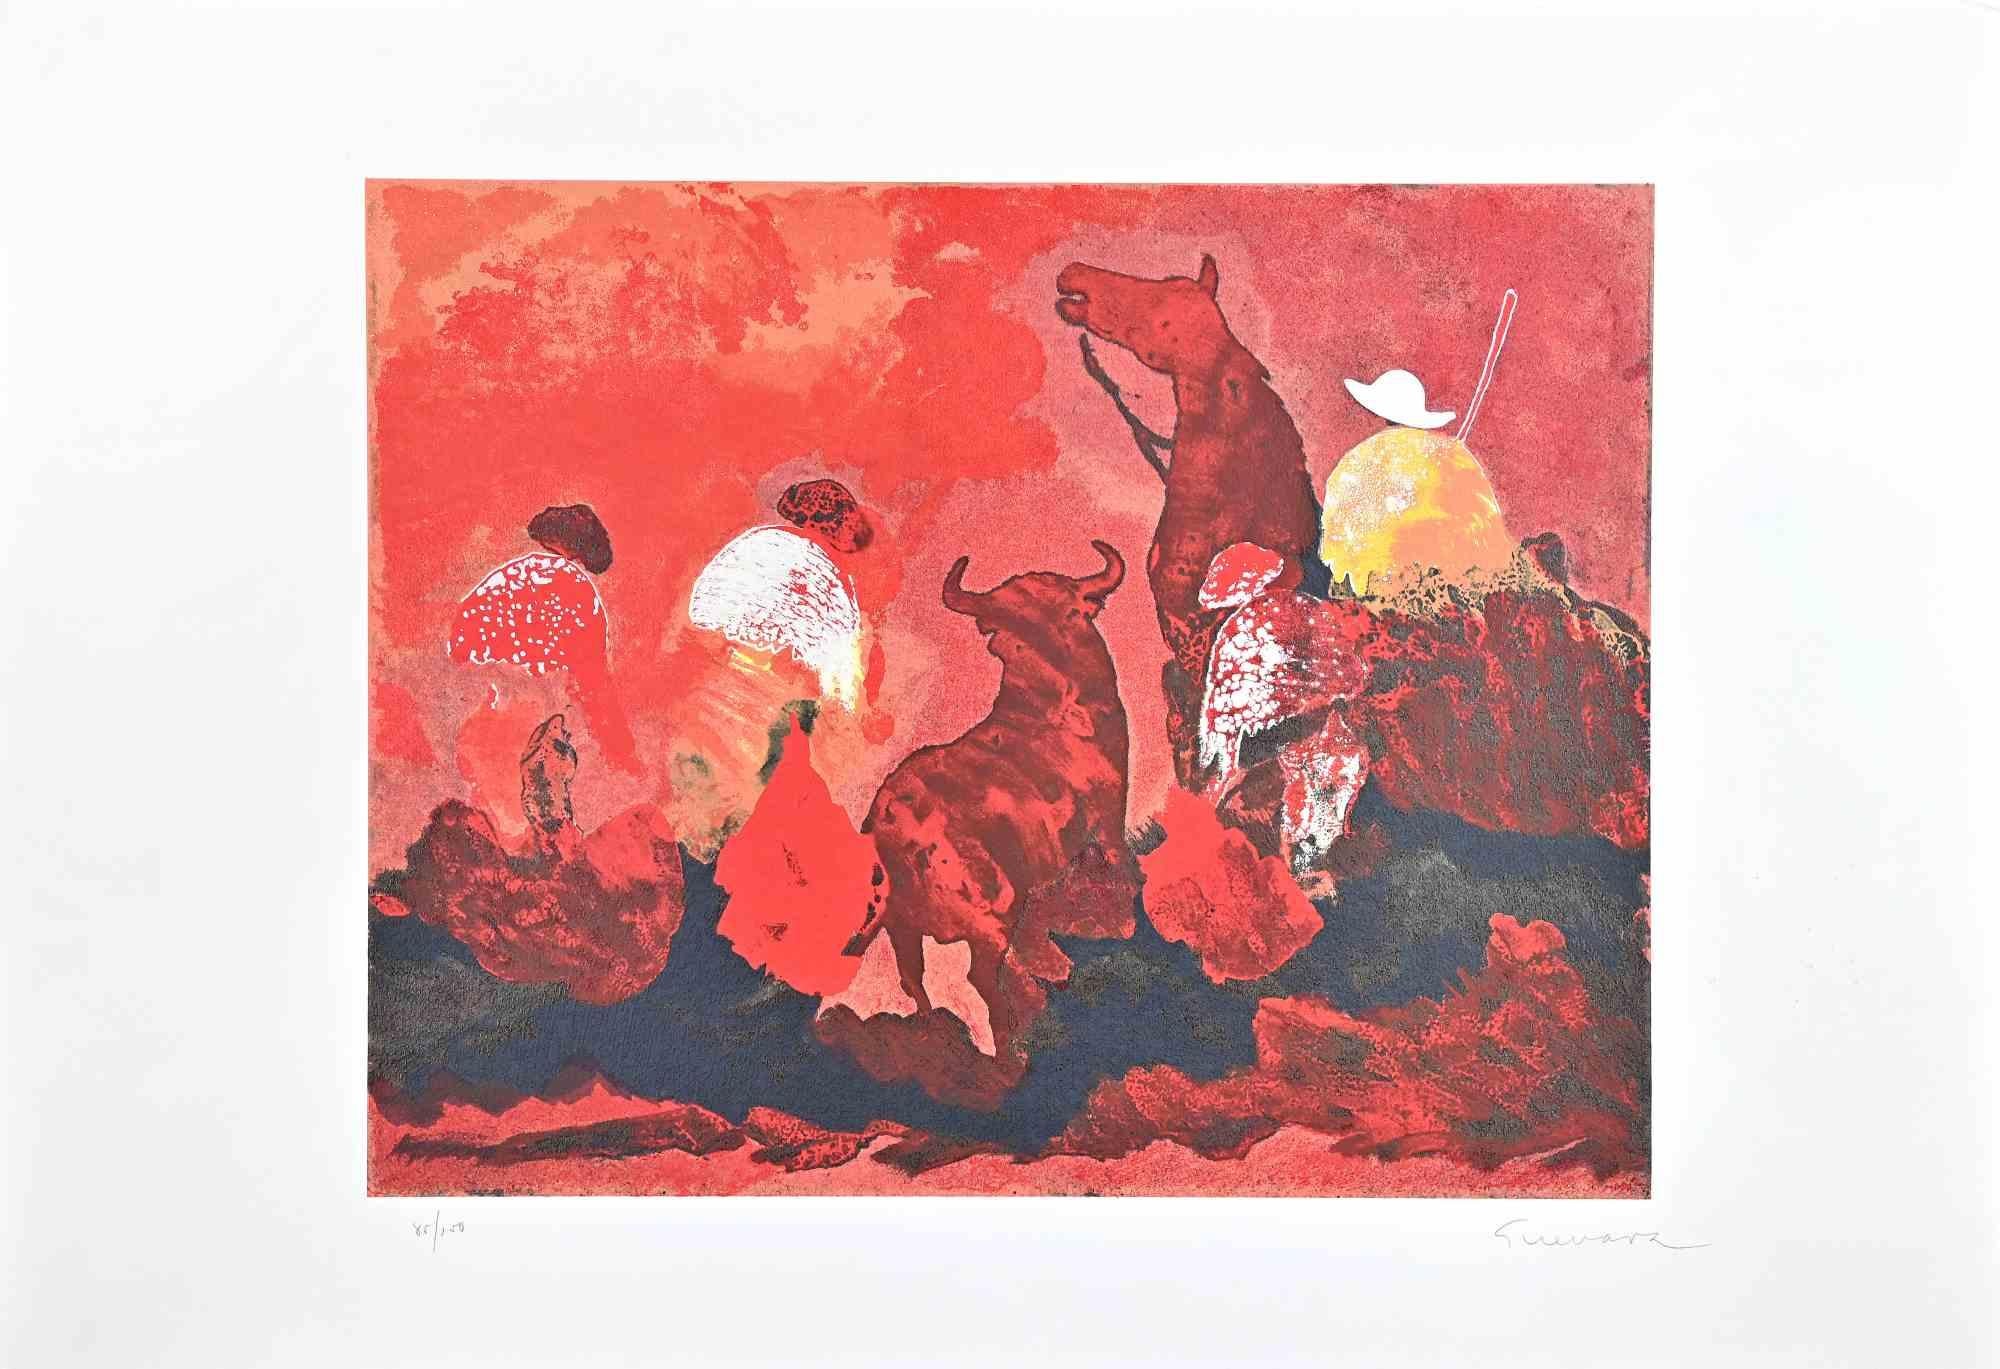 Bullfight In Red - Original Screen Print by José Guevara - 1989